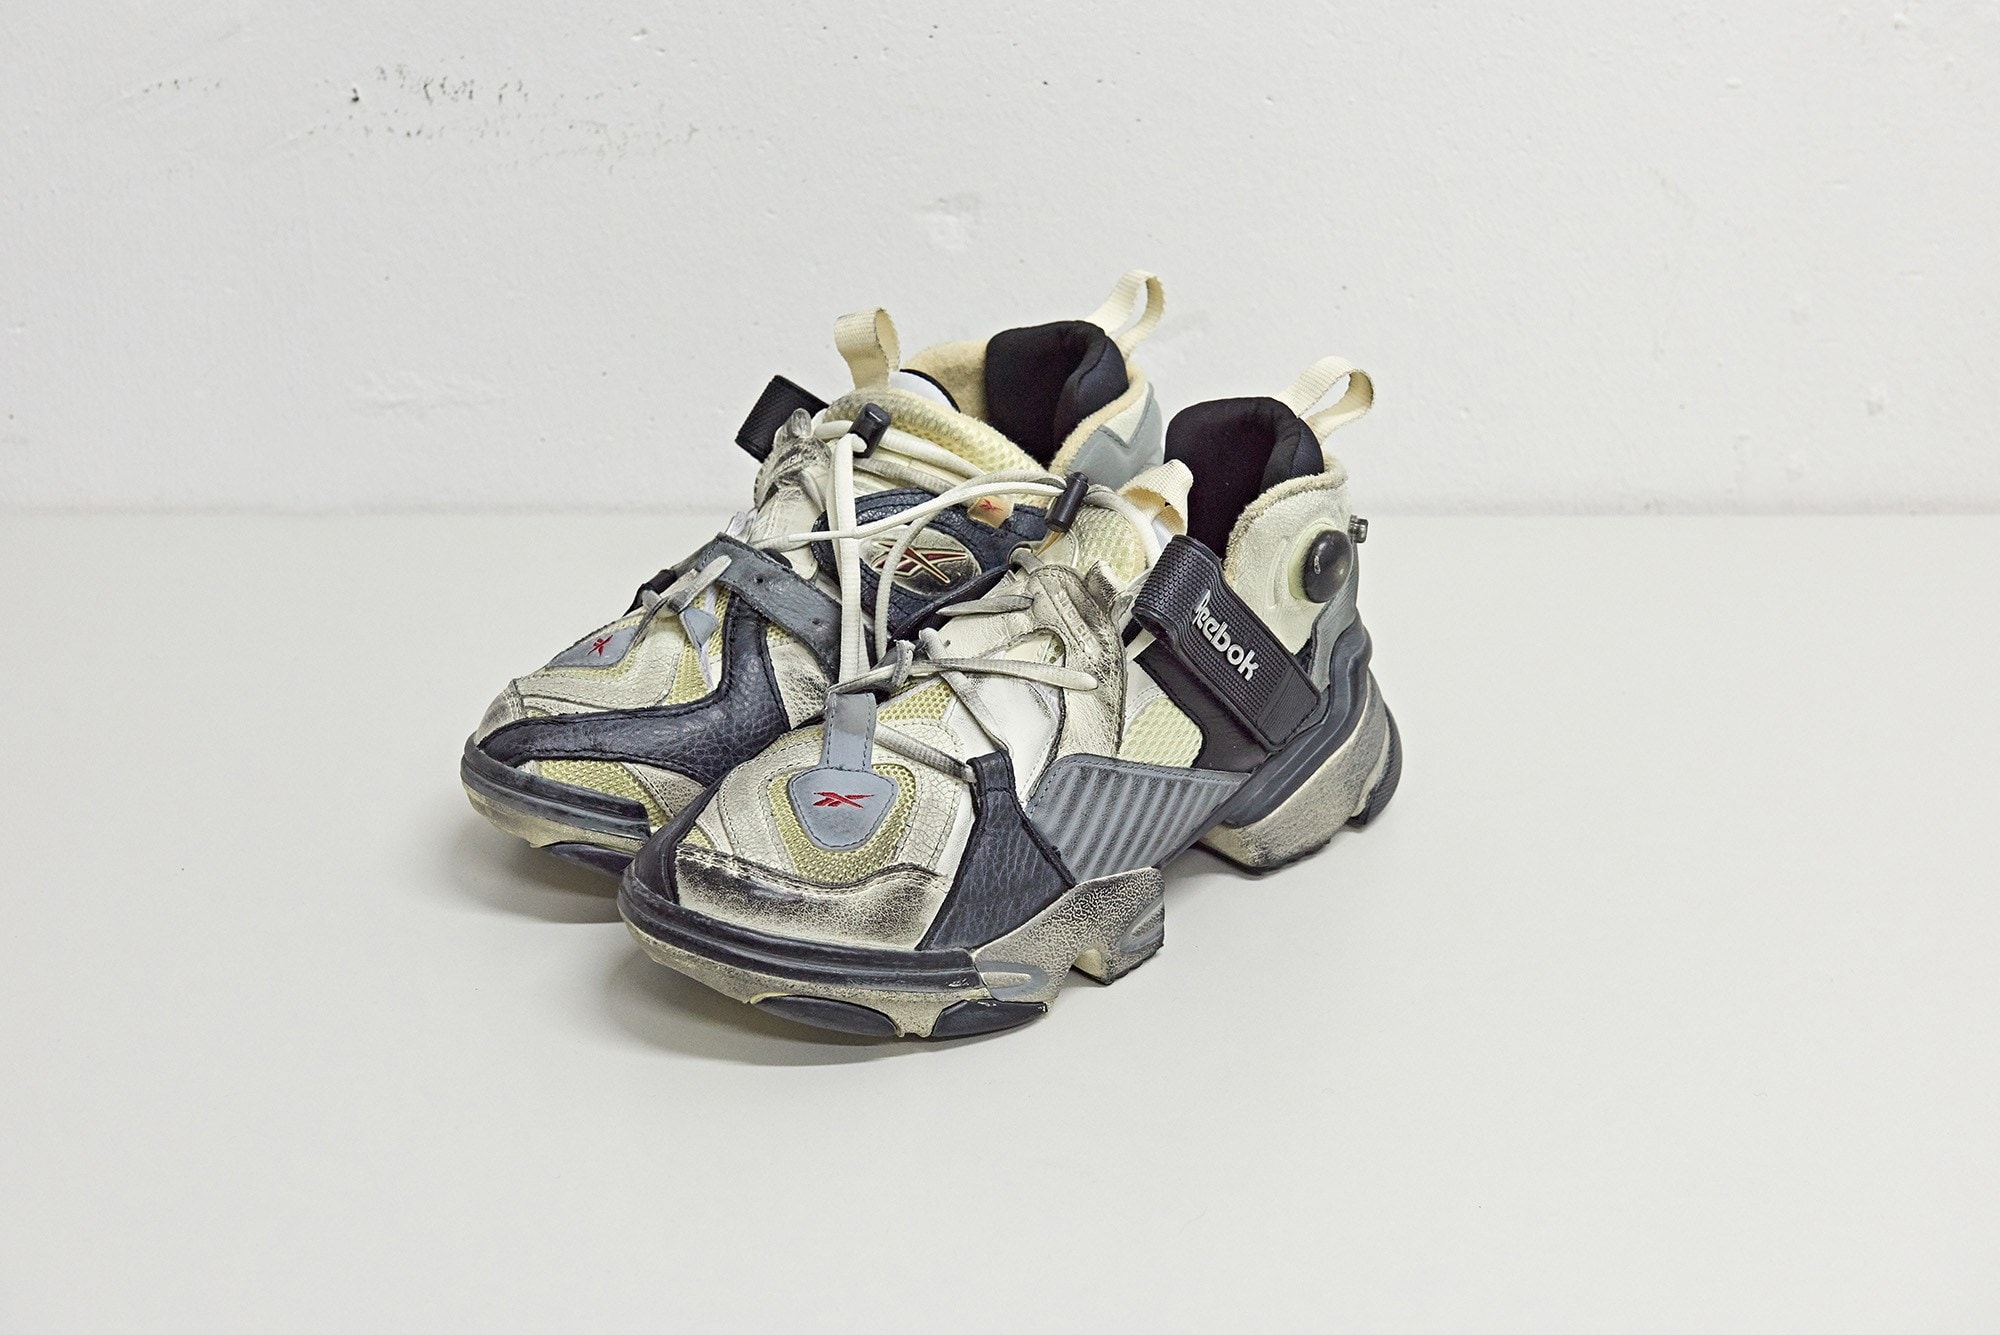 Vetements Reebok Genetically Modified Pump Sneaker 10 Corso Como Seoul Exclusive